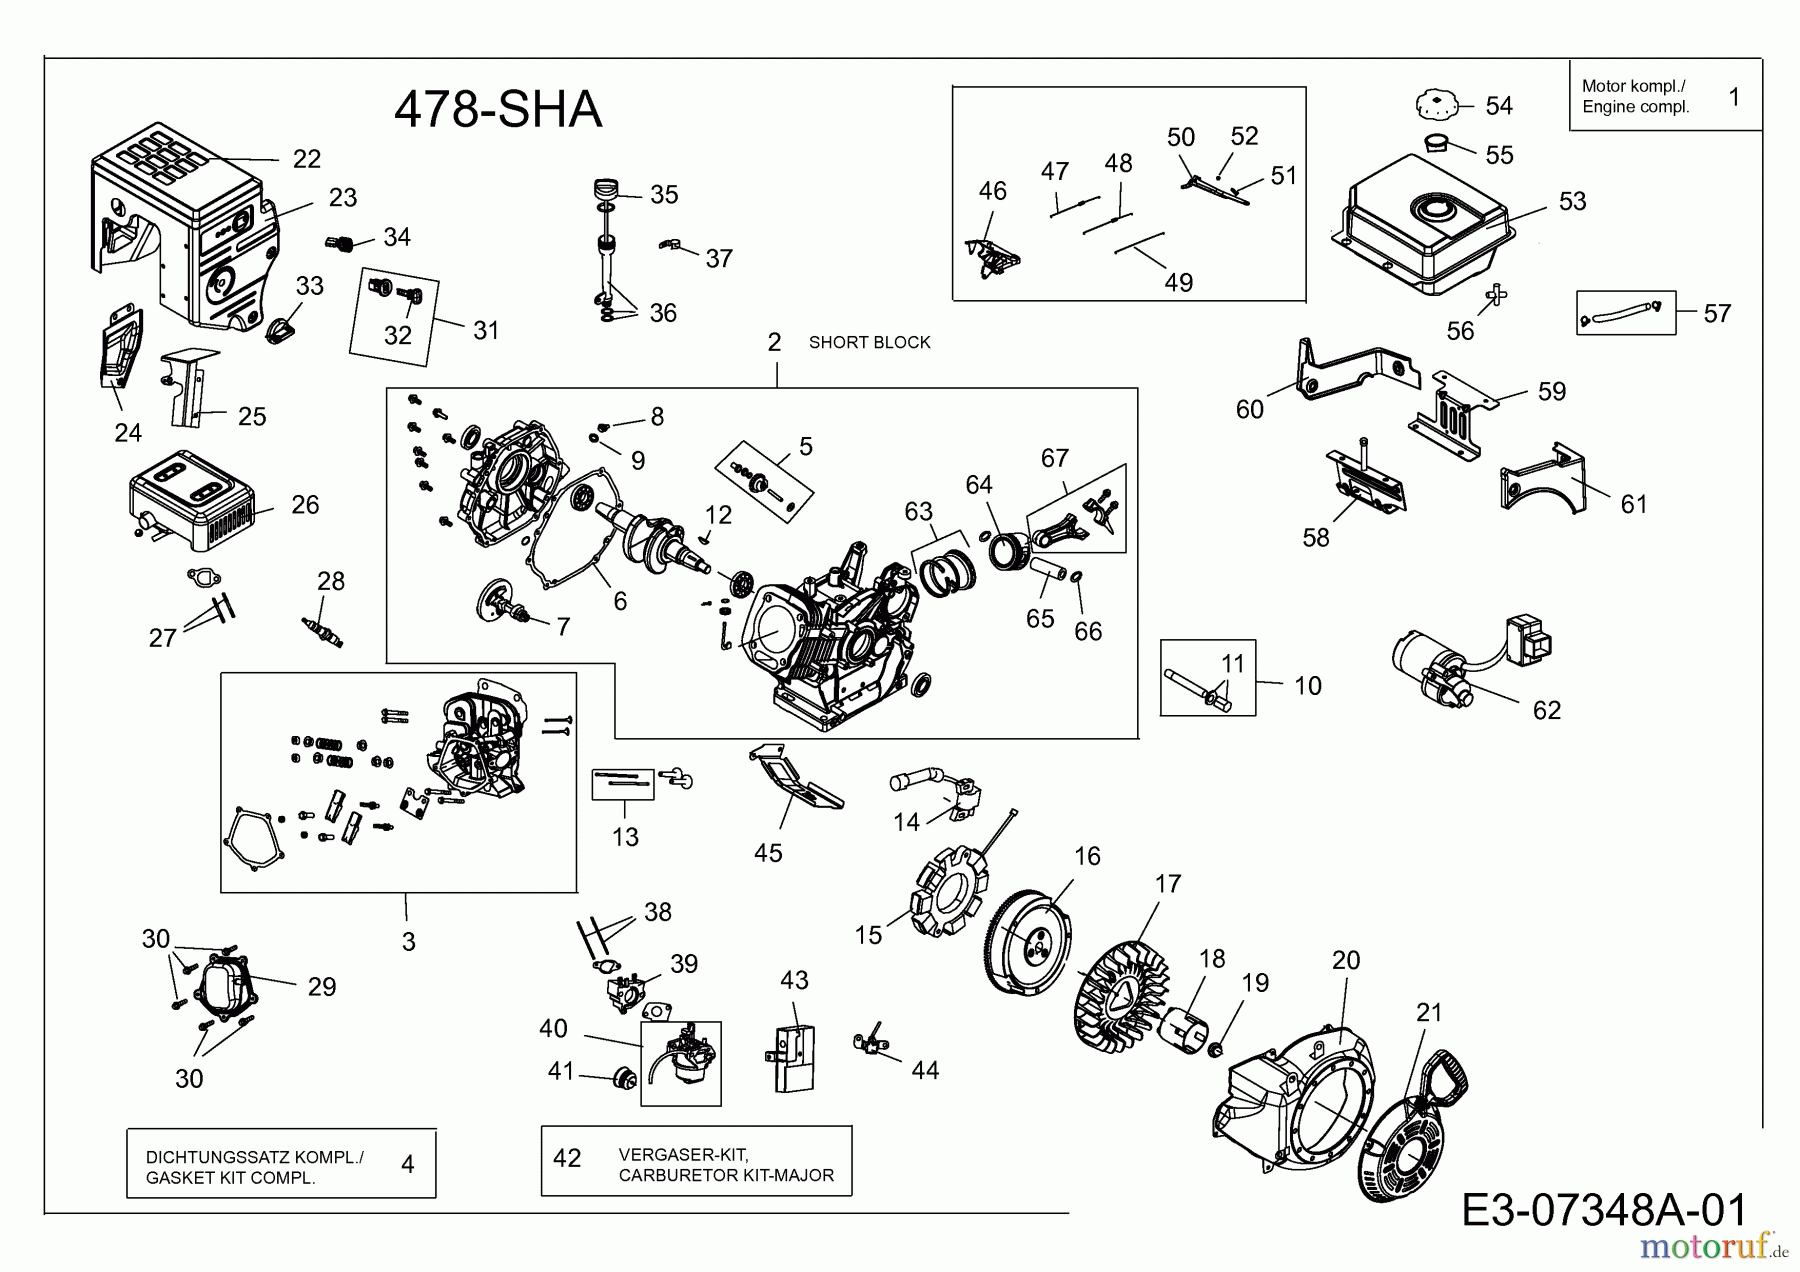  MTD-Motoren Horizontal 478-SHA 752Z478-SHA  (2012) Motor